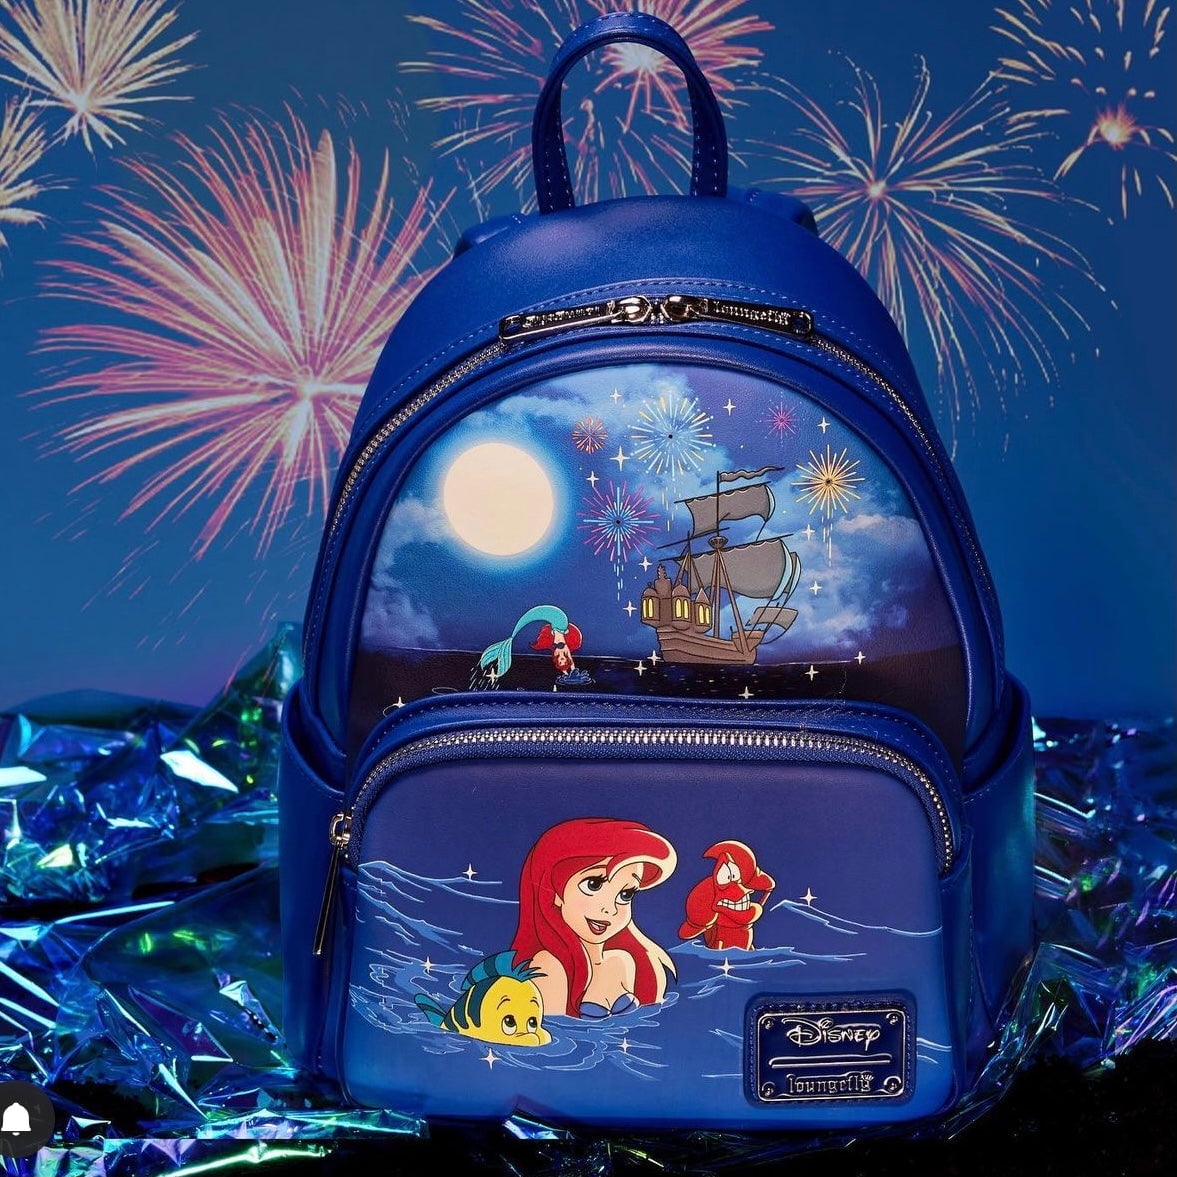 Disney Loungefly Mini Backpack - The Little Mermaid Ariel Fireworks